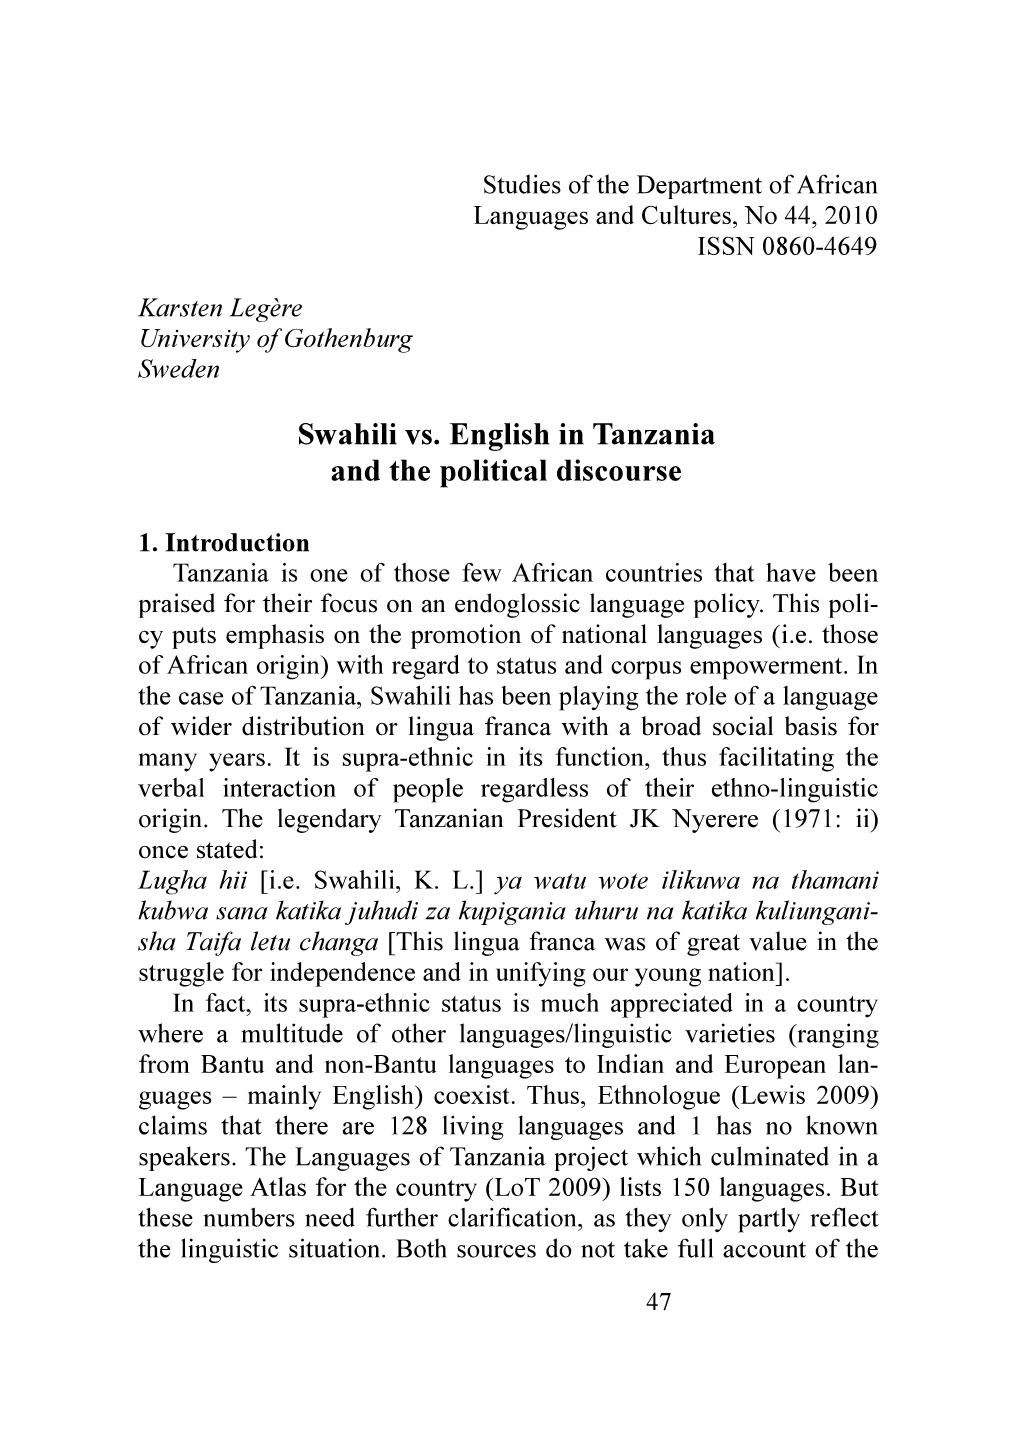 Swahili Vs. English in Tanzania and the Political Discourse